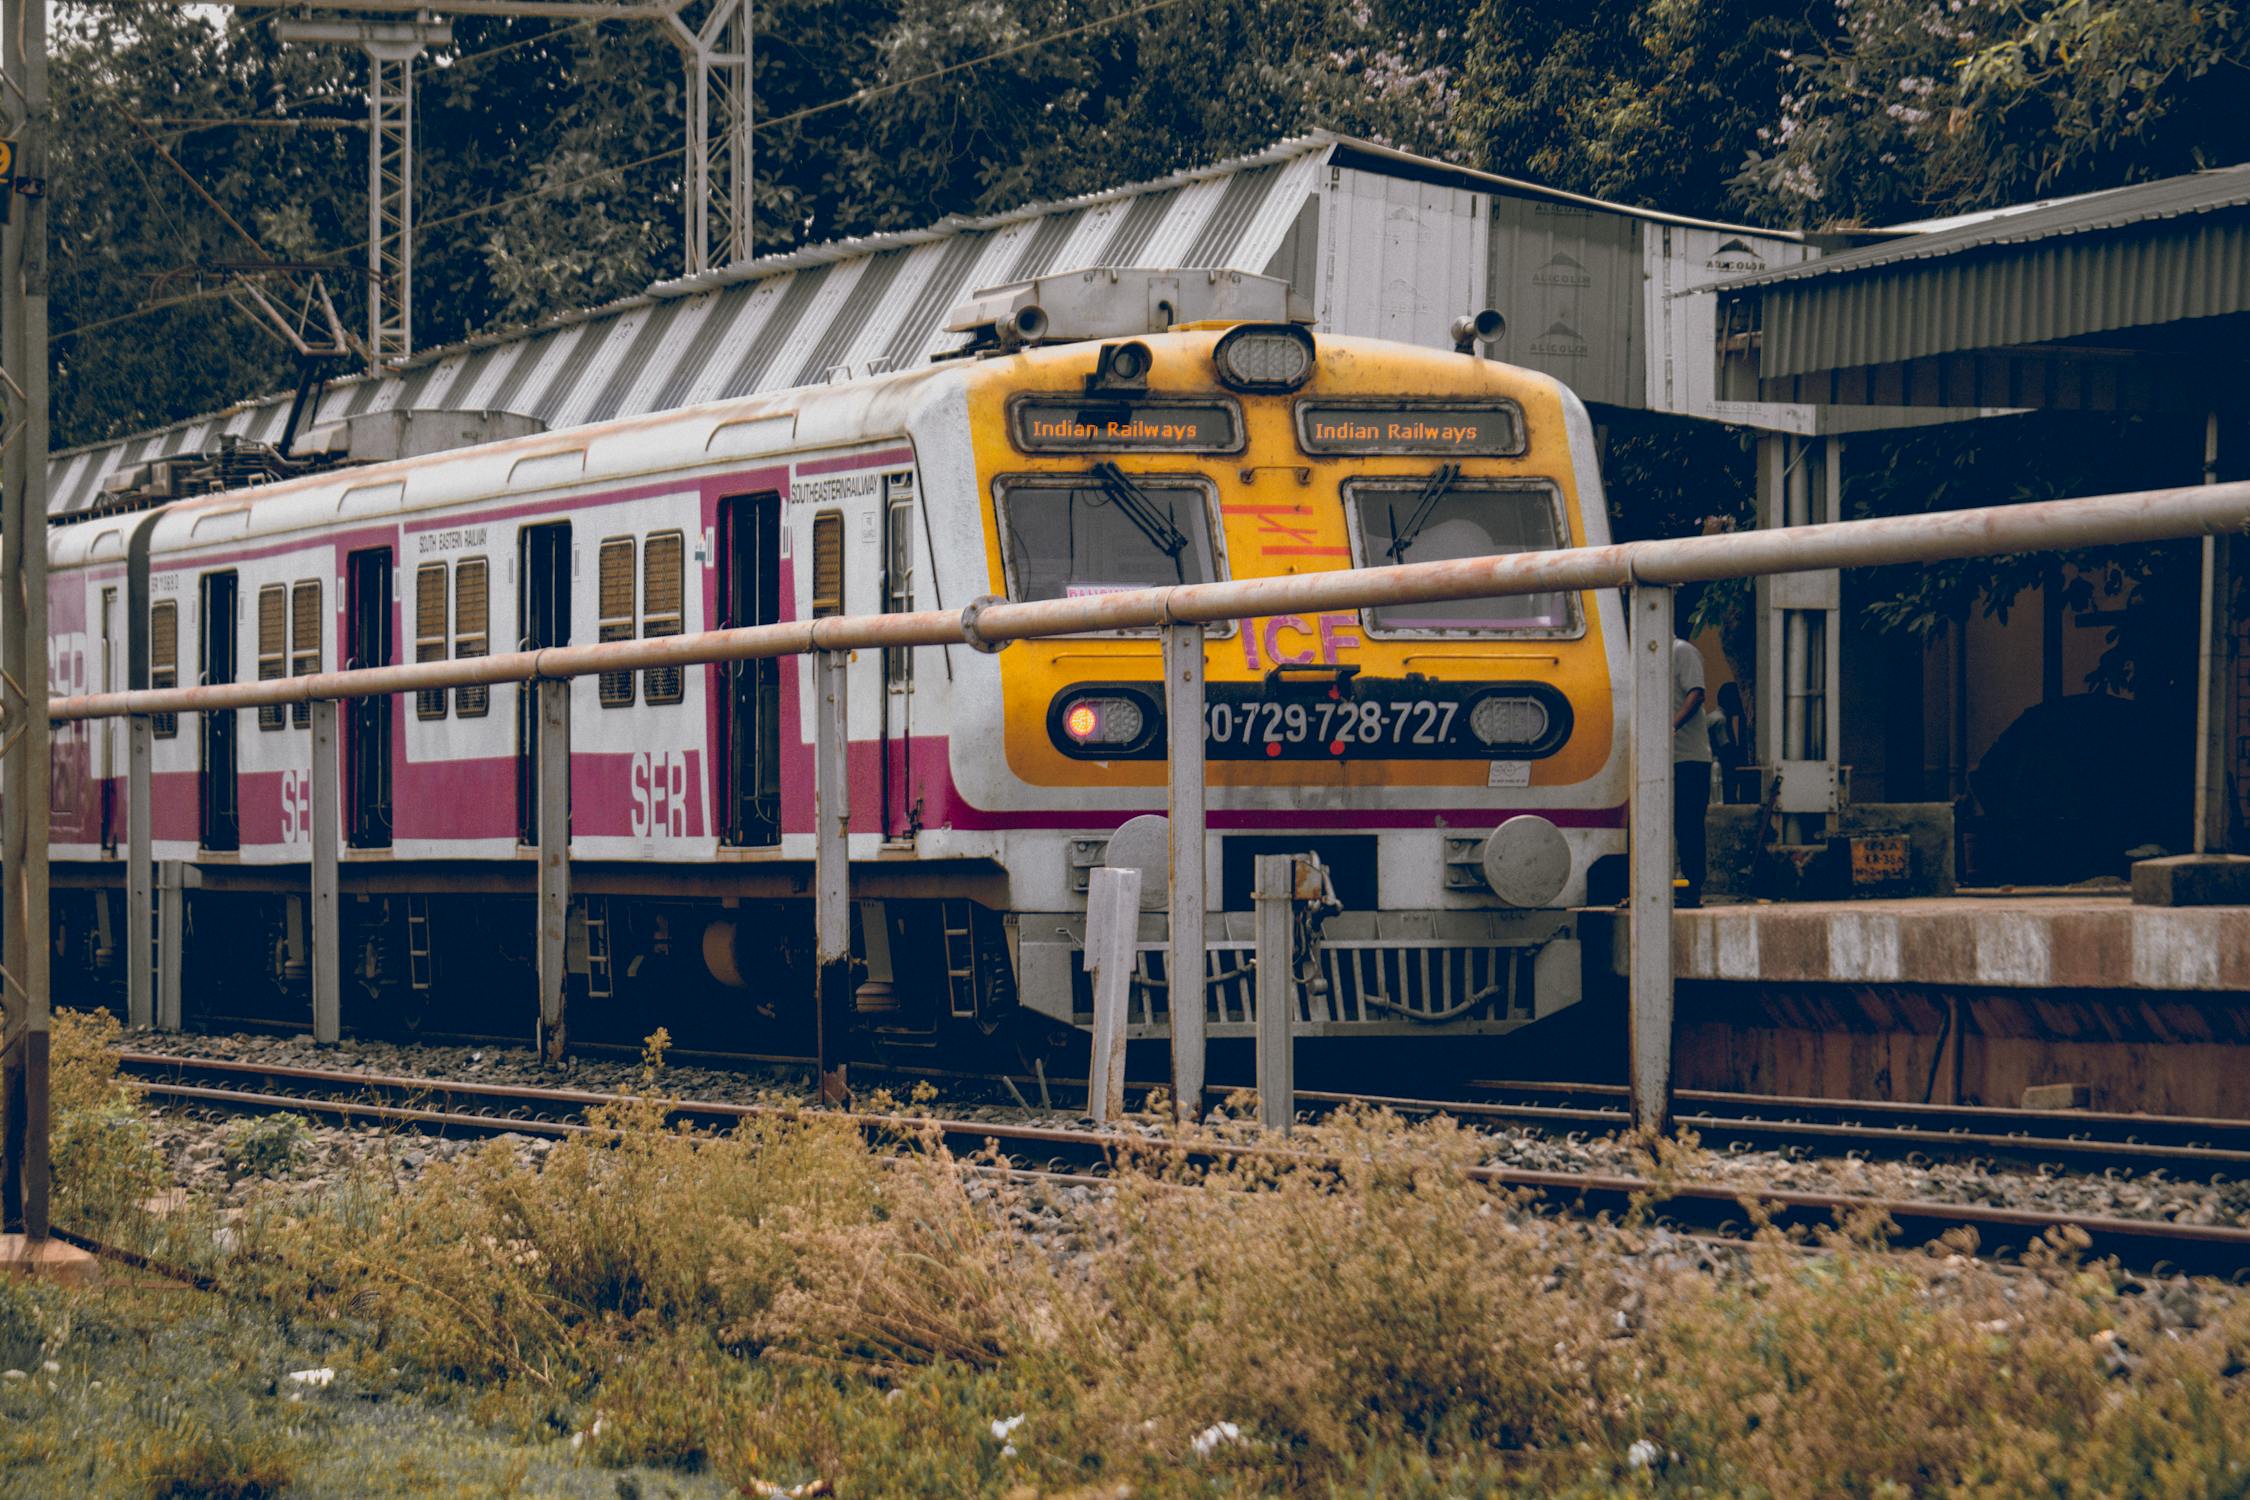 Indian Train Photo by Ranjit Pradhan from Pexels: https://www.pexels.com/photo/train-near-platform-12120331/